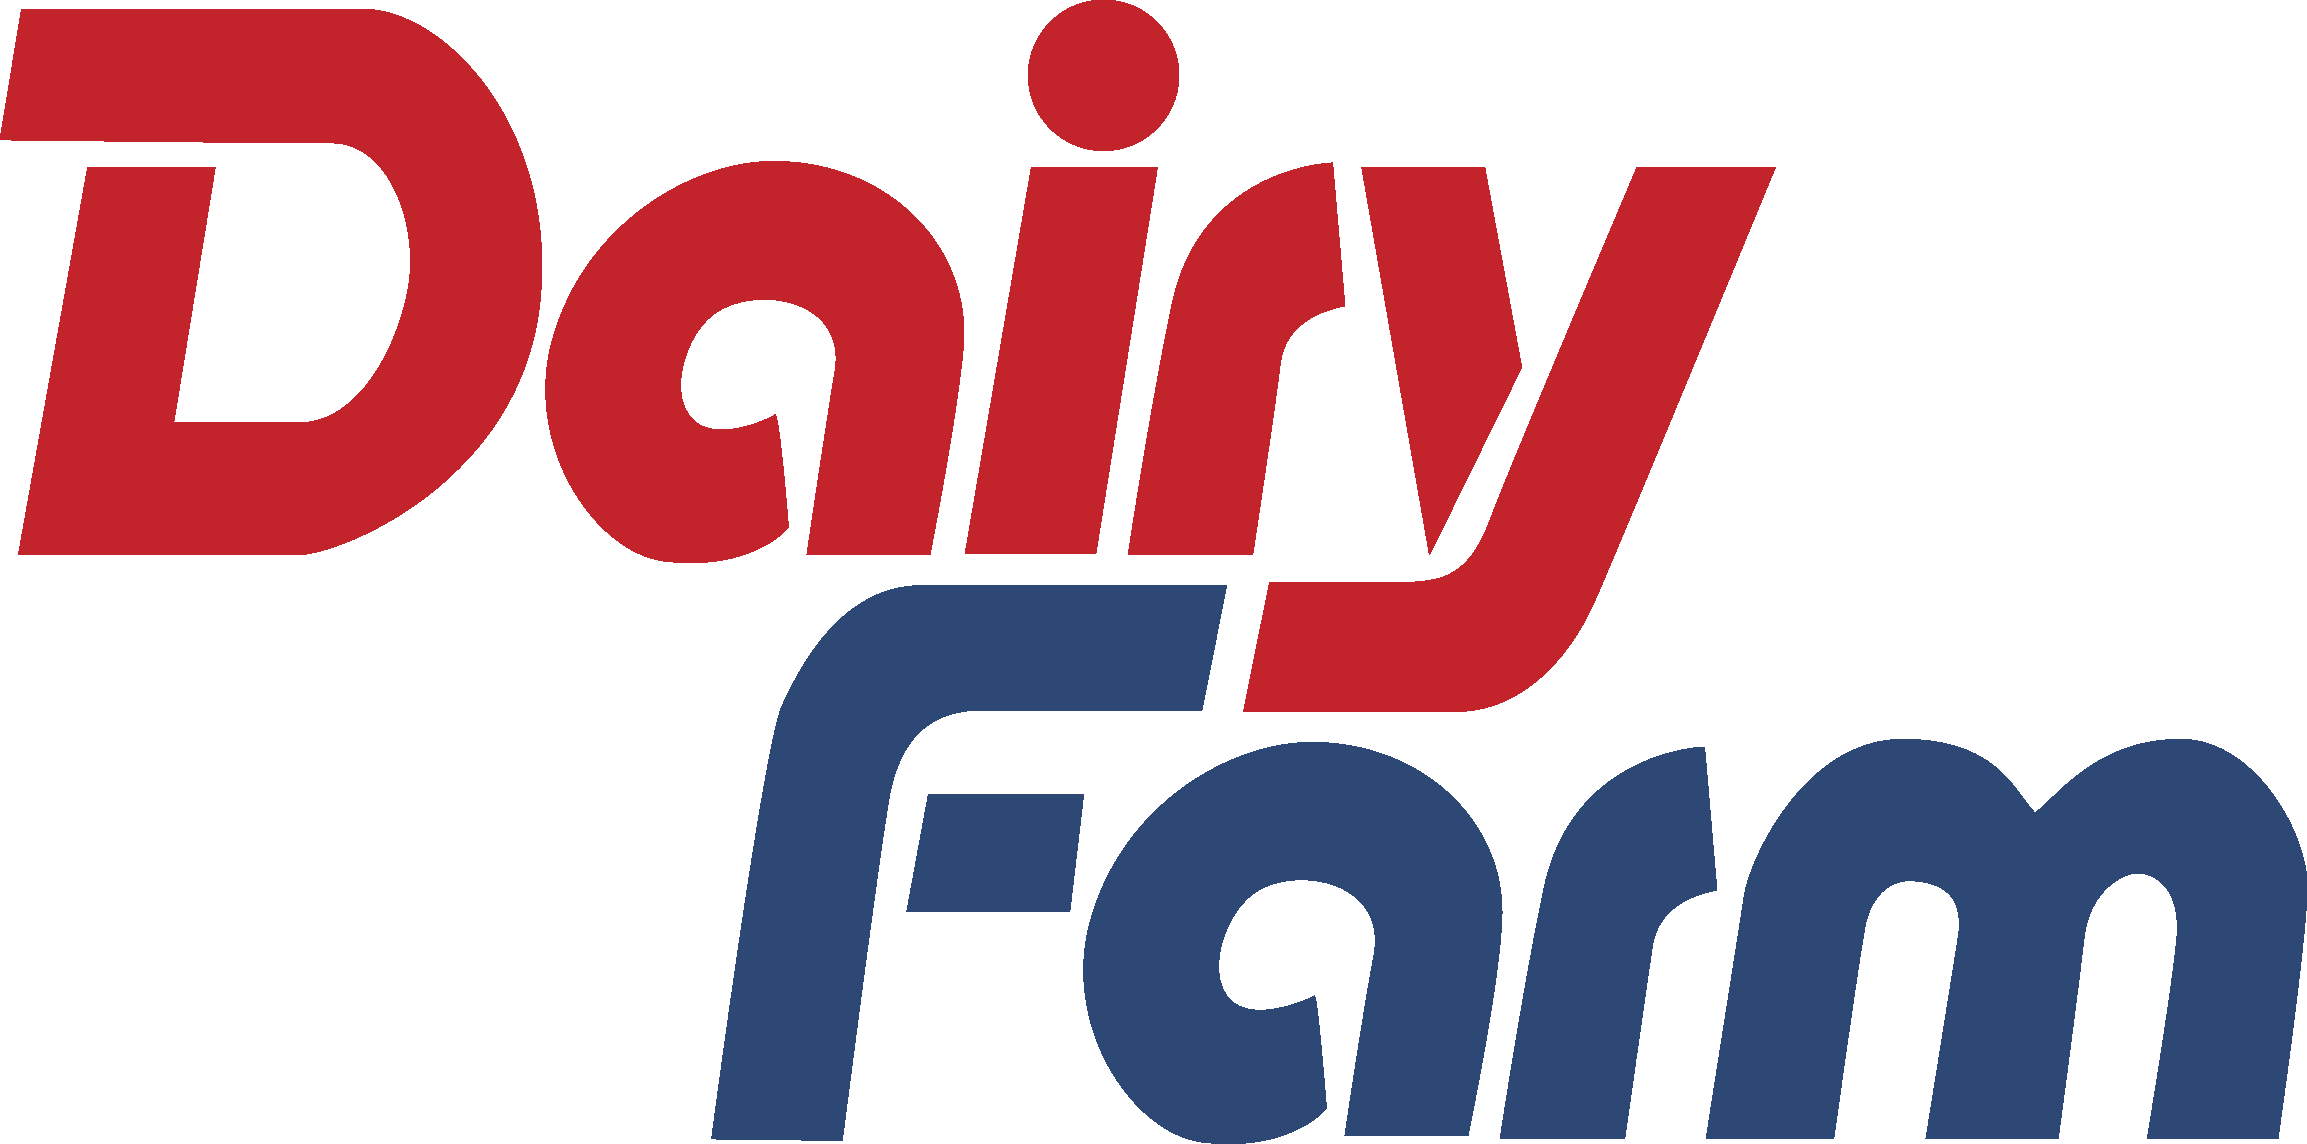 Dairy Farm Logo png